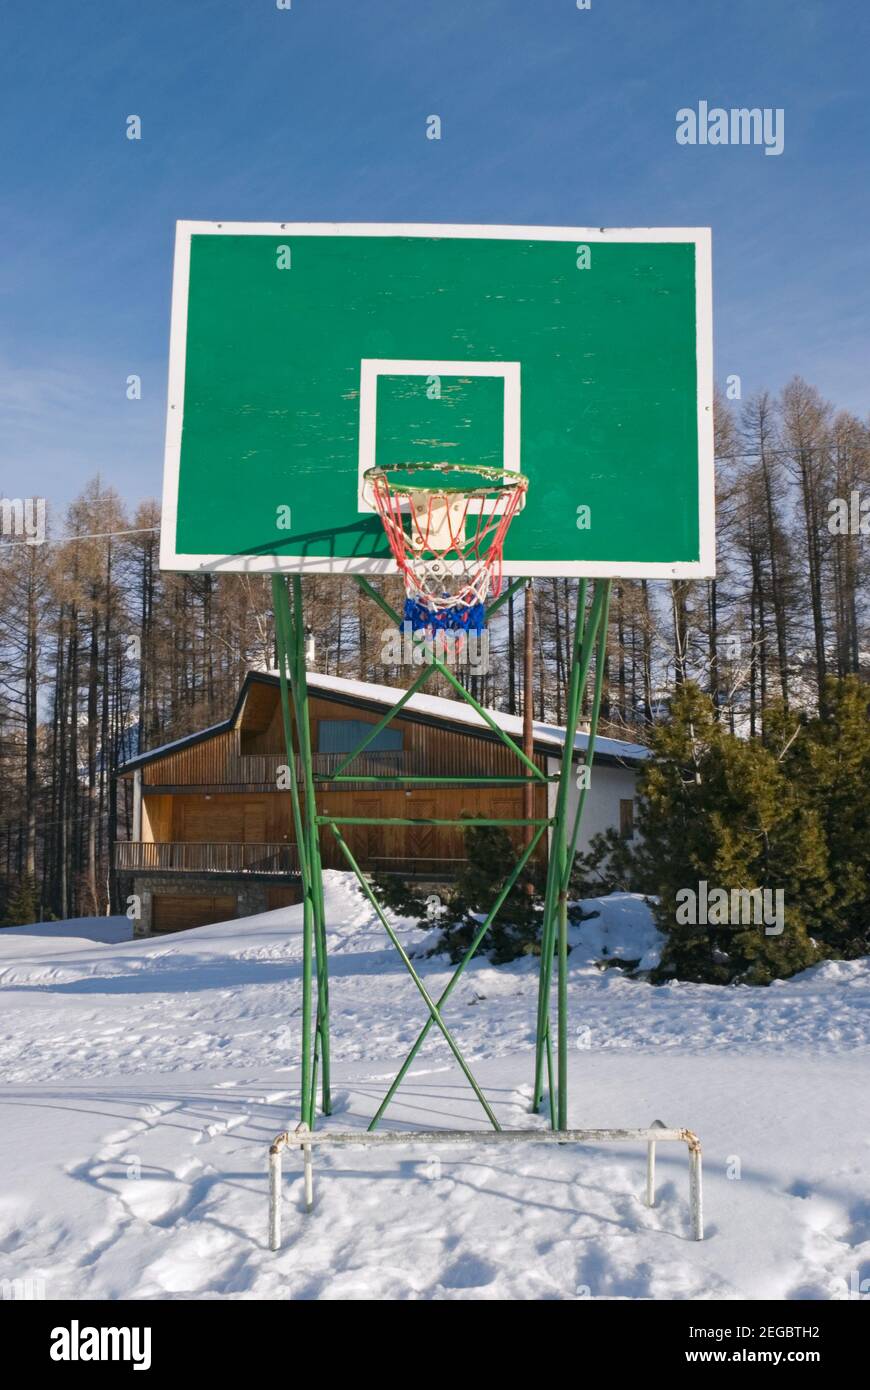 basketball playground under snow Stock Photo